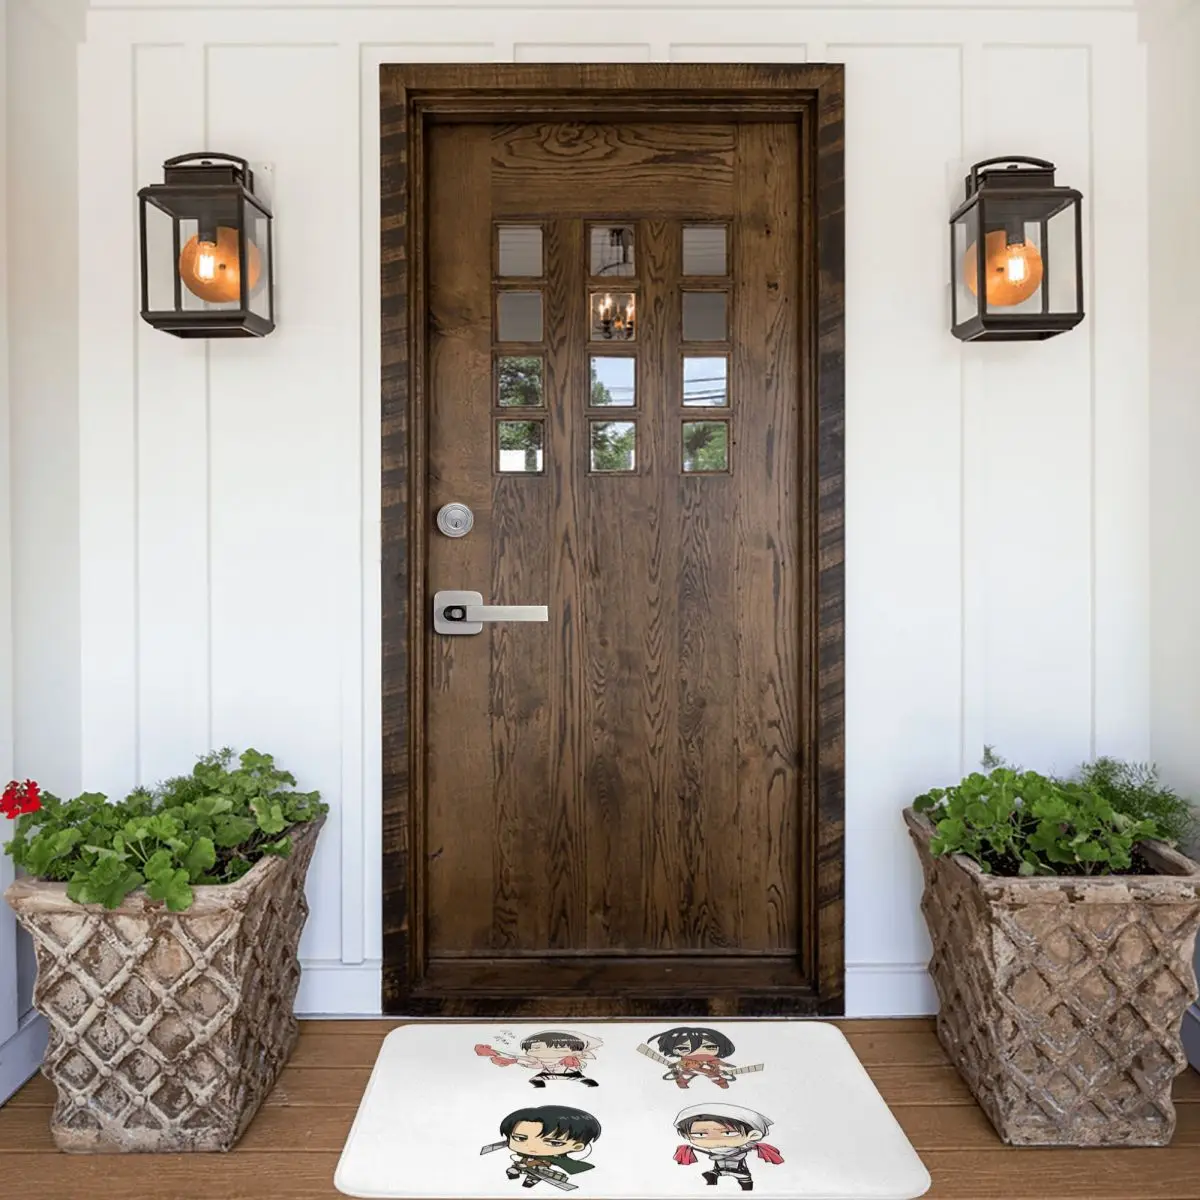 Attack On Titan Bathroom Mat Chibi Pack Doormat Living Room Carpet Entrance Door Rug Home Decoration images - 6